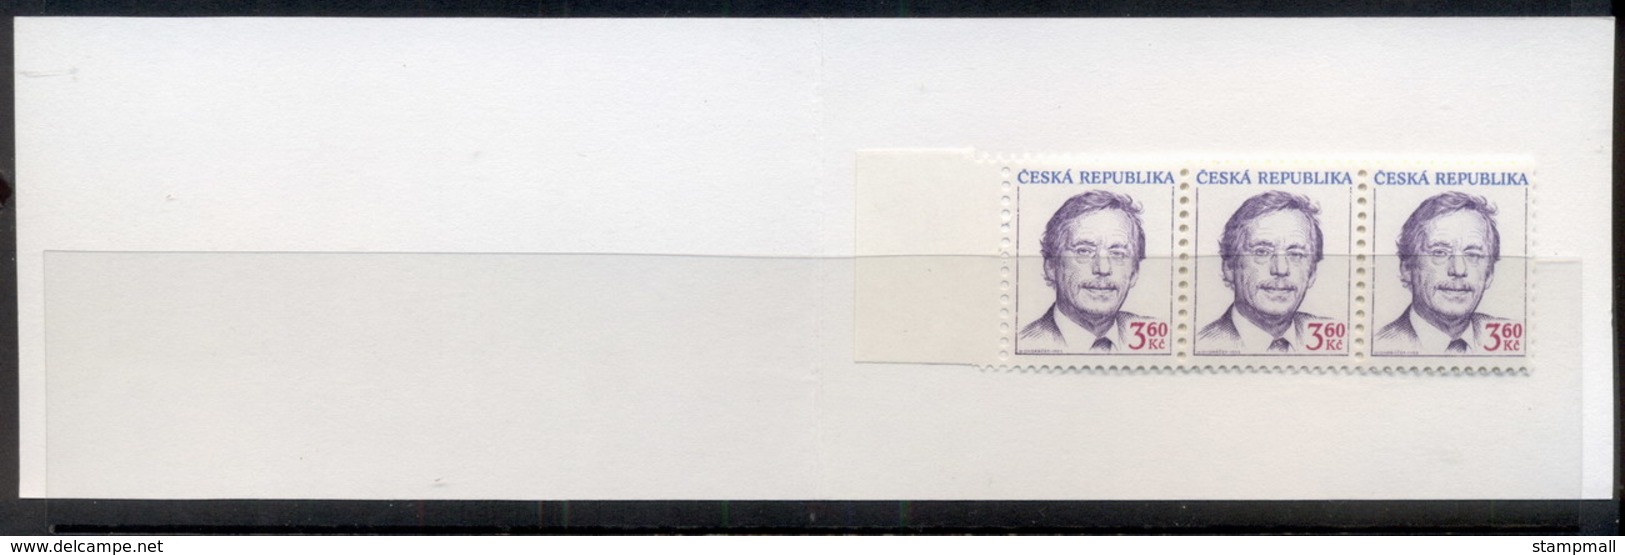 Czech Republic 1995 Redrawn Booklet MUH - Unused Stamps